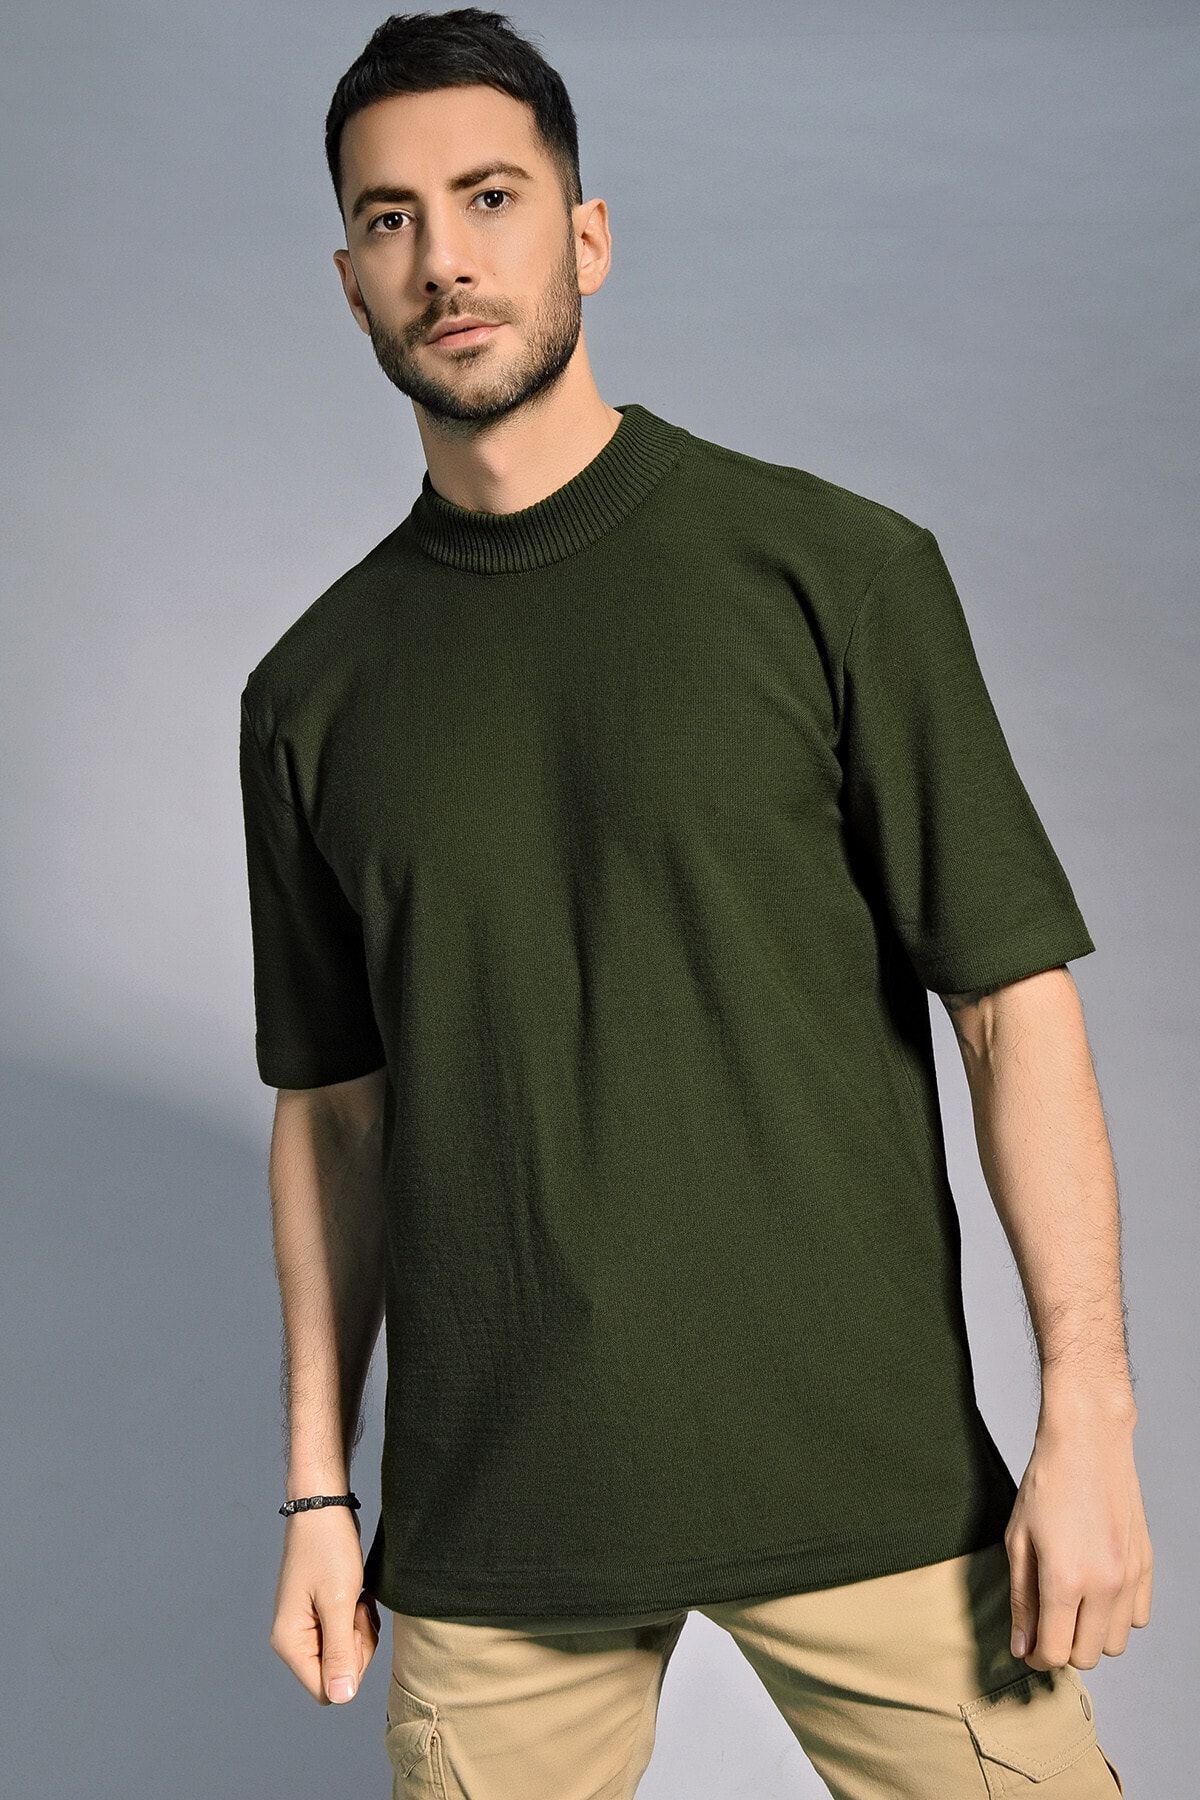 CHUBA Erkek Oversize Triko T-shirt Haki 20w188